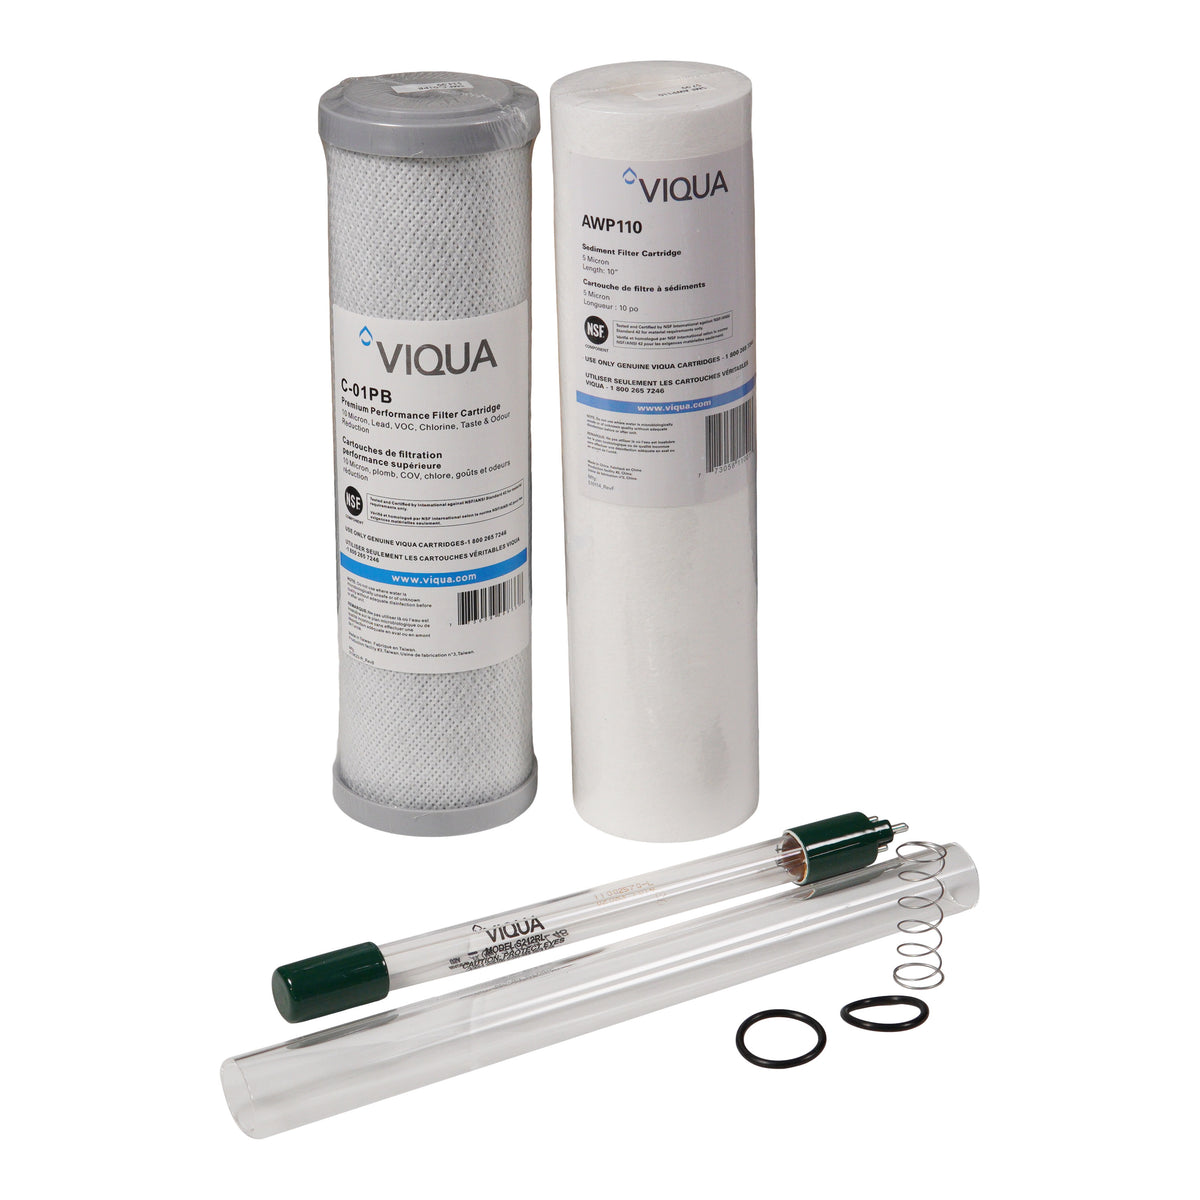 Viqua VT1-DWS Lamp, Sleeve and Filters Bundle